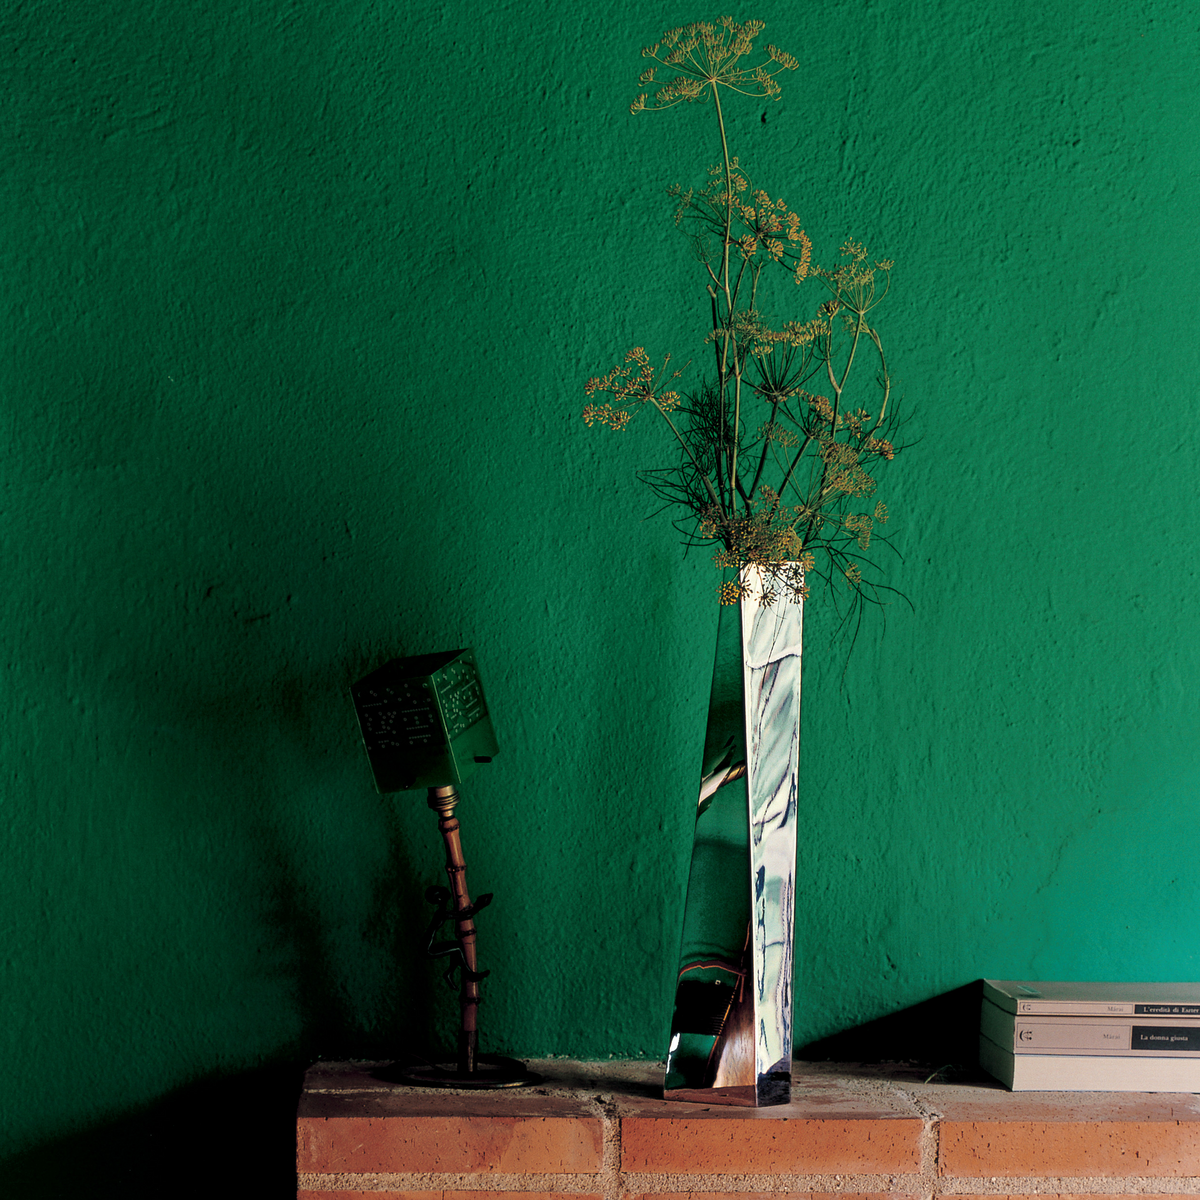 Metal flower vase on brick wall against green backdrop